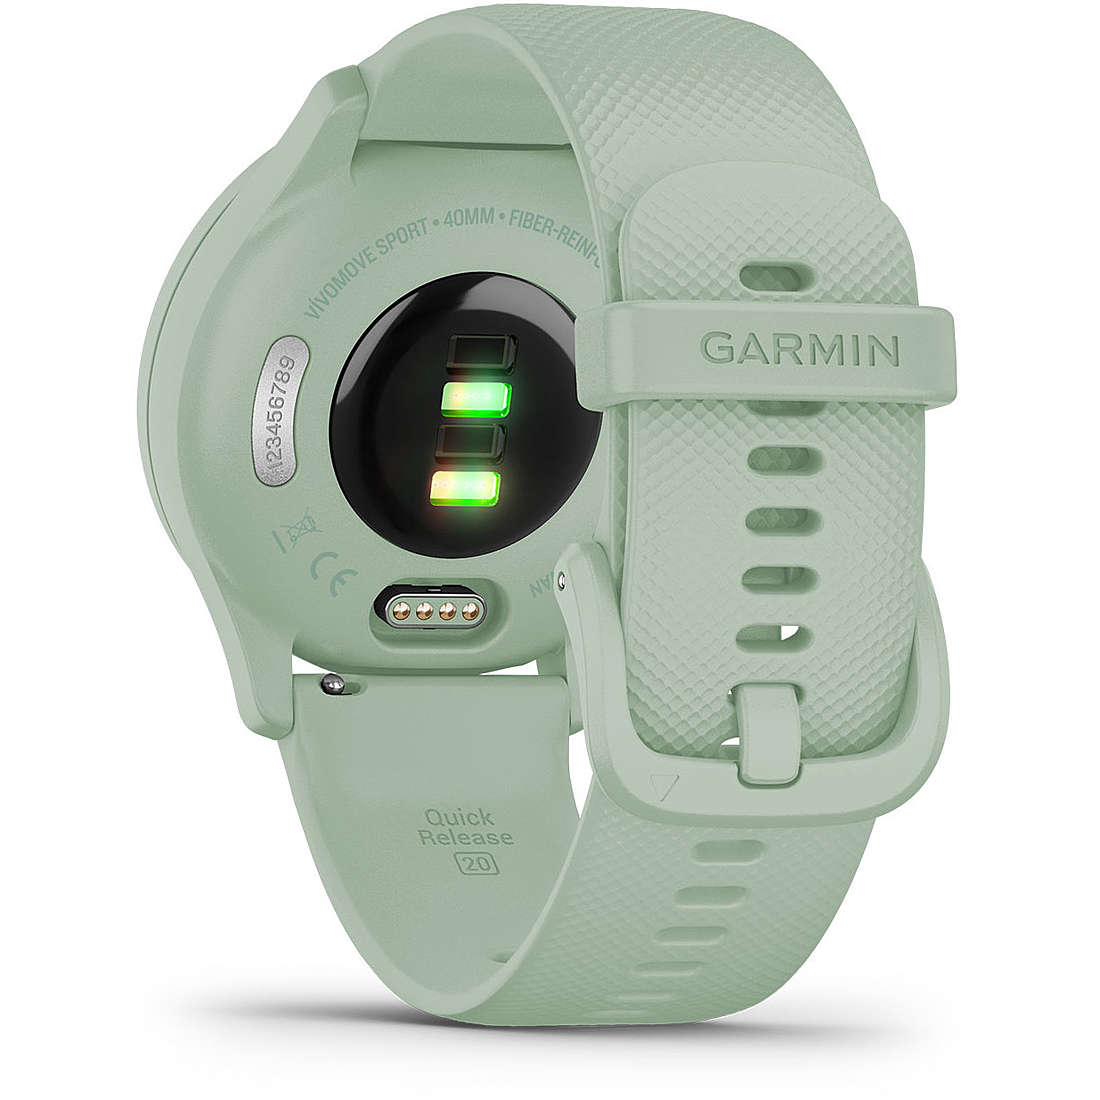 Smartwatch Garmin Vivomove orologio donna 010-02566-03